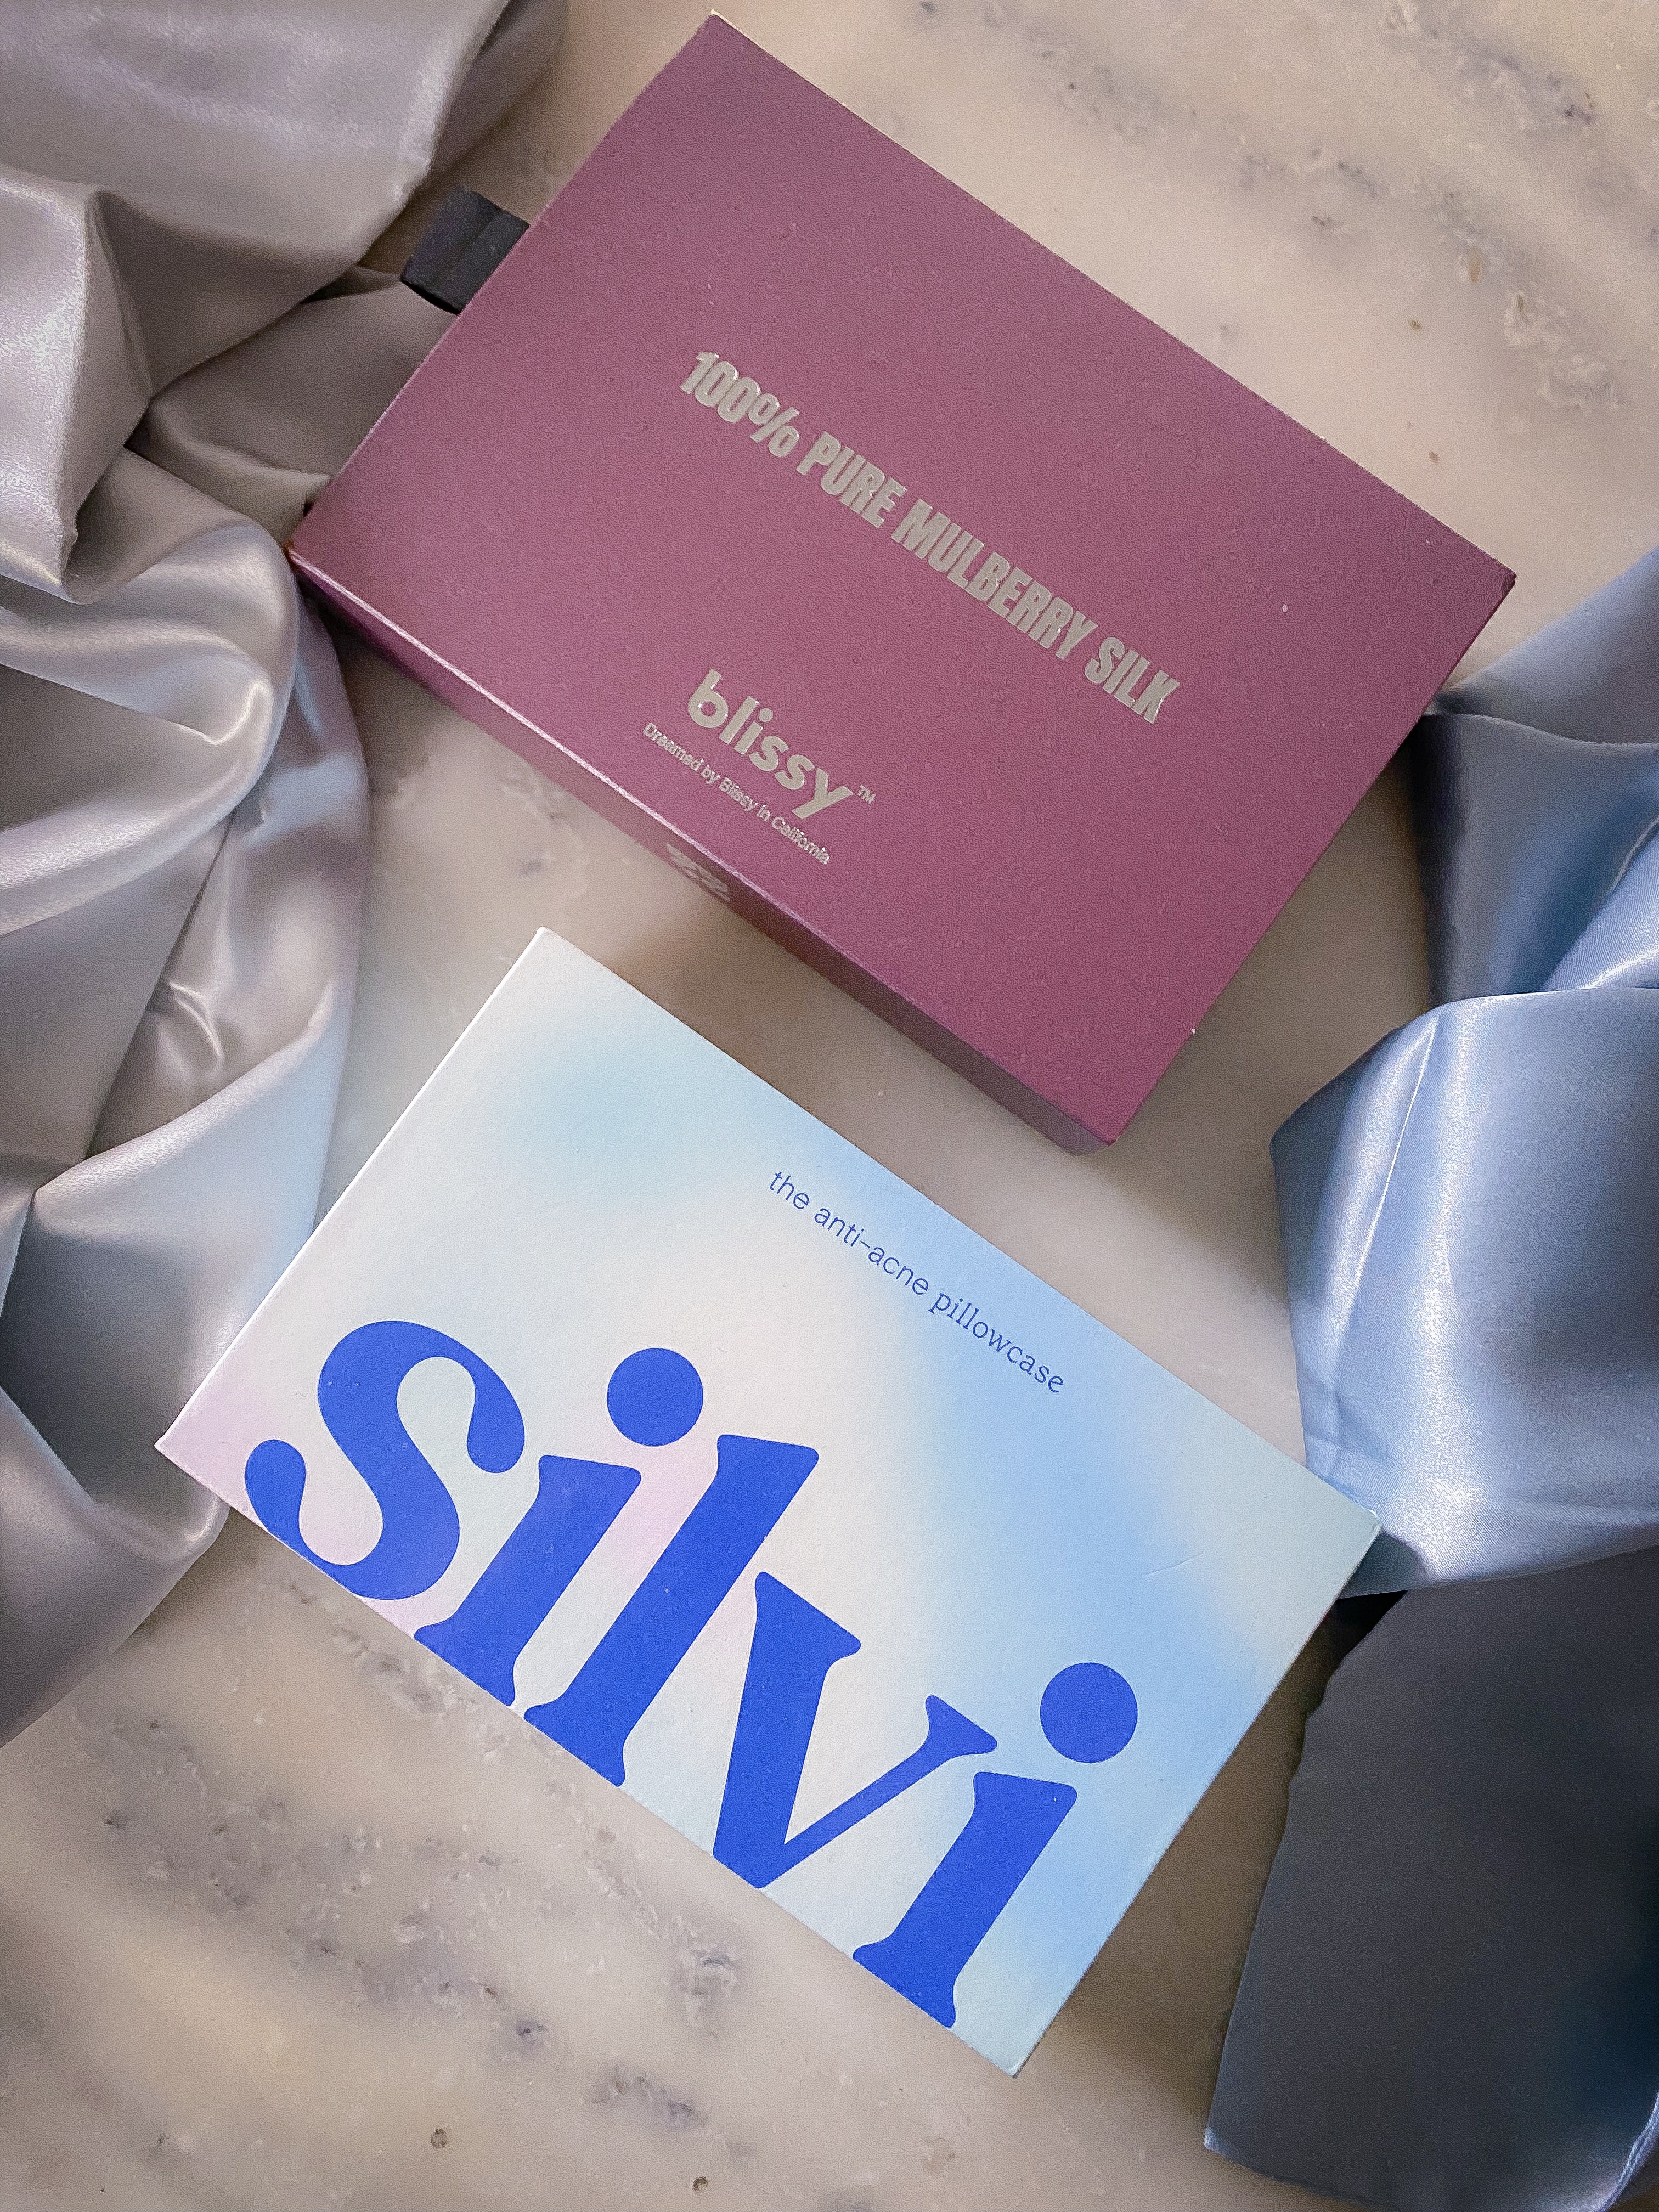 slip vs. Silvi: Which Silk Pillowcase is the Best?